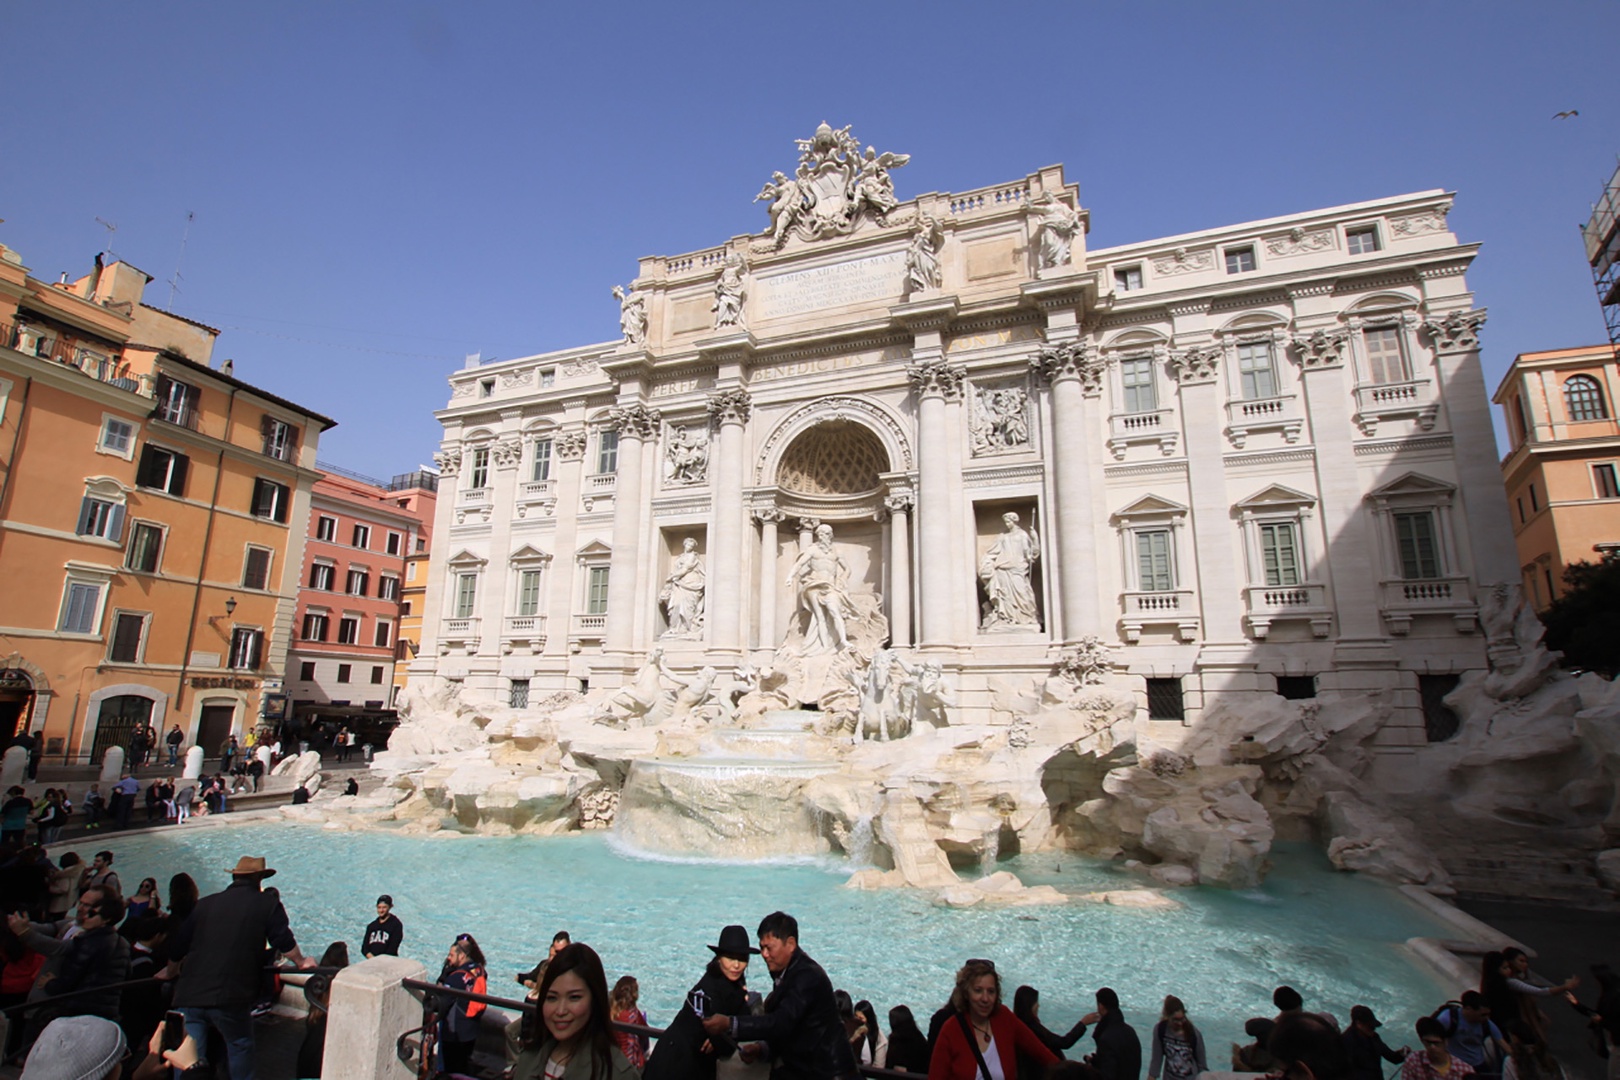 The wonderful Trevi Fountain is near!